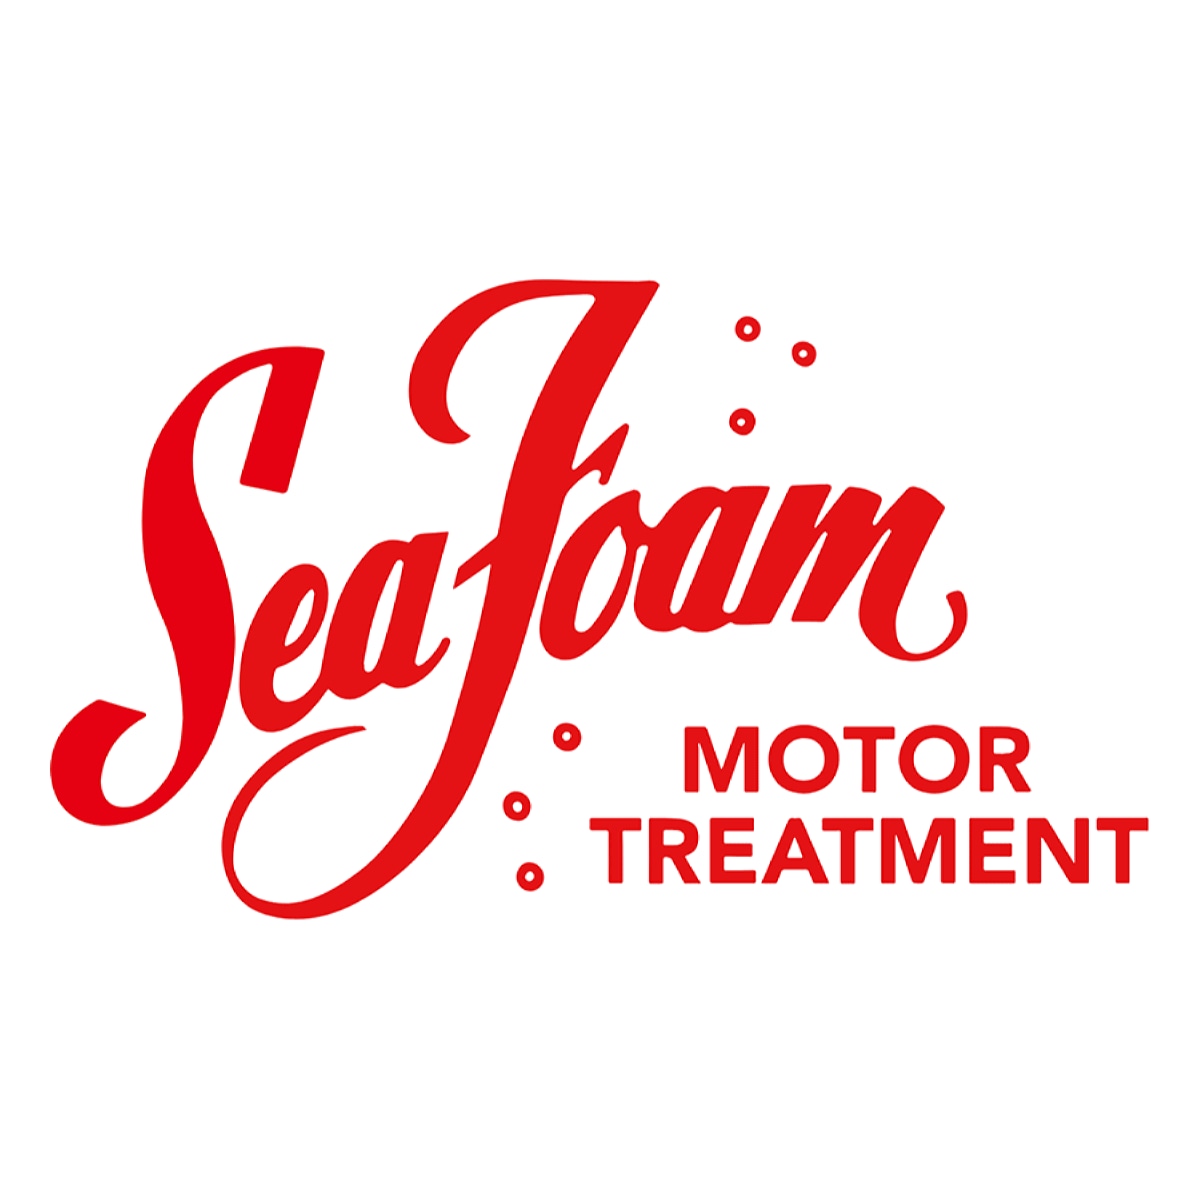 SeaFoam Motor Treatment